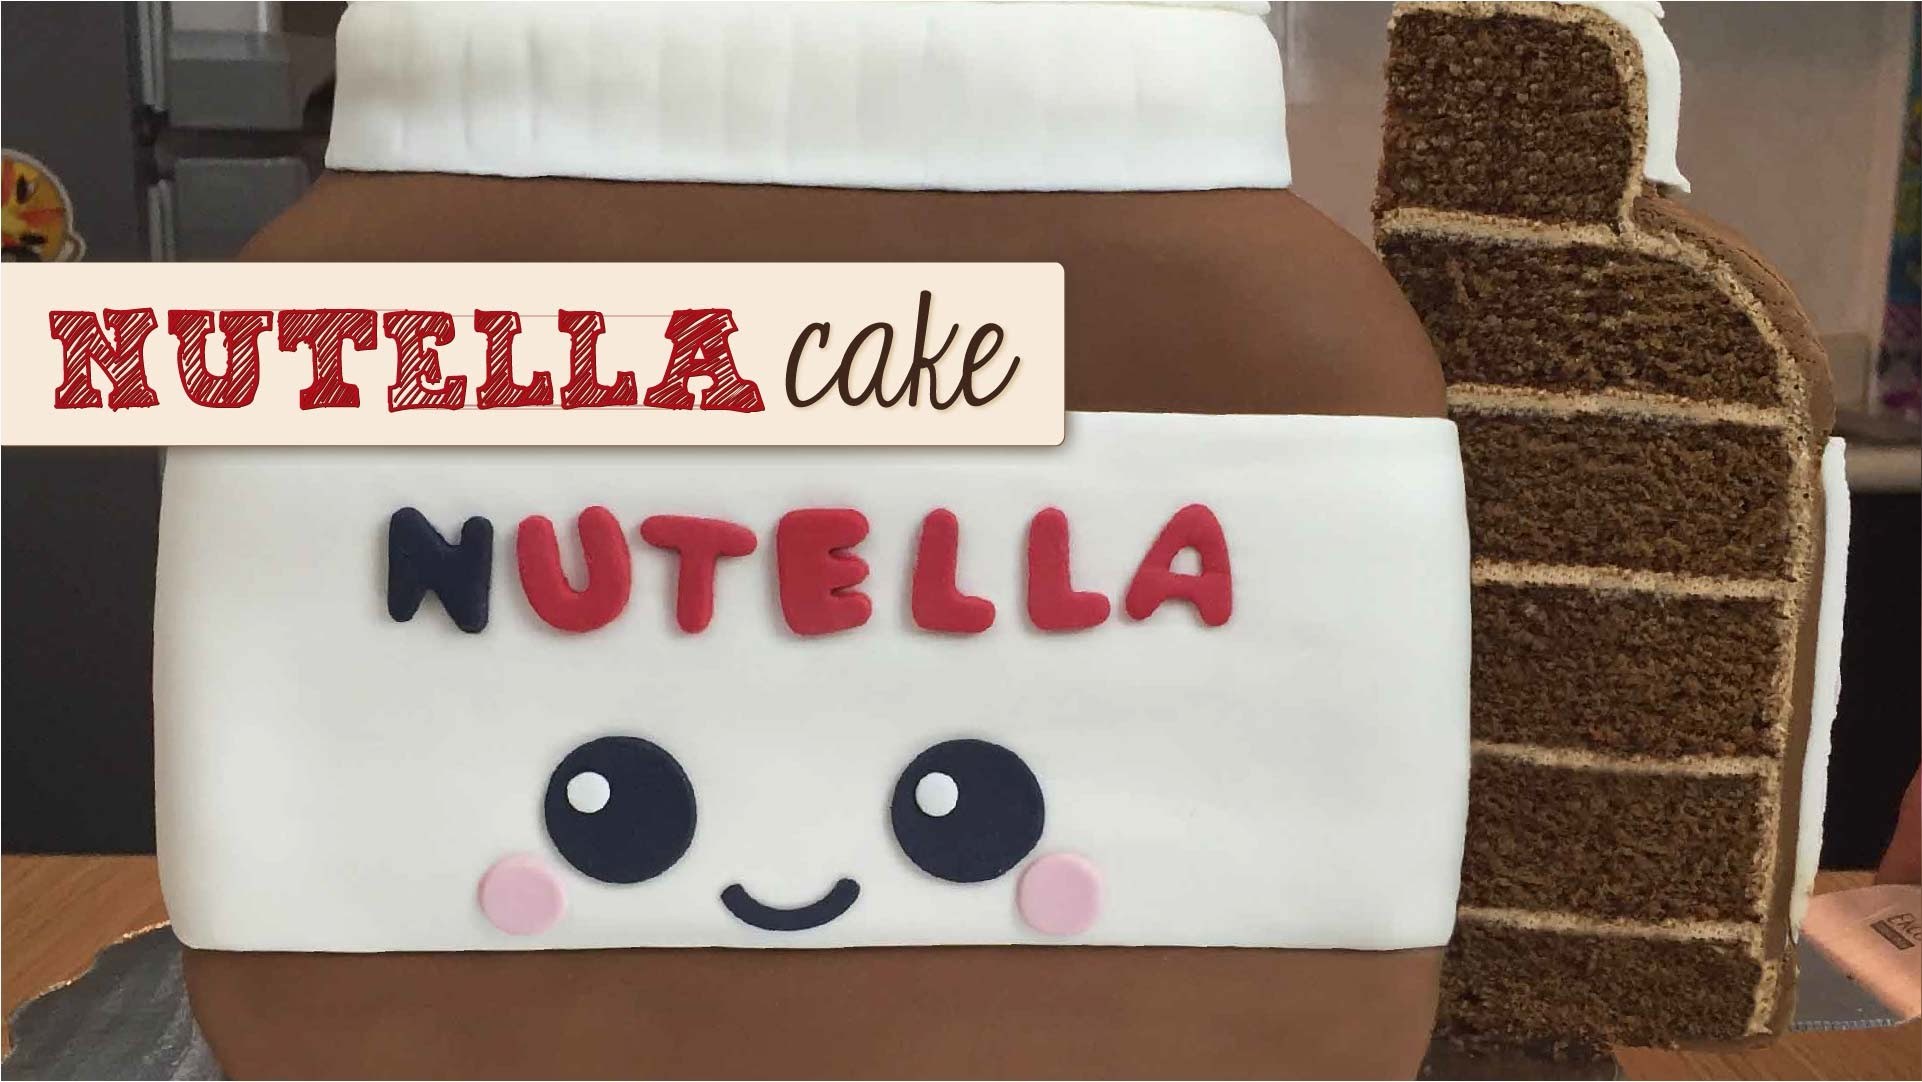 Pastel Bote de Nutella - Nutella Cake. Dacosta's Bakery